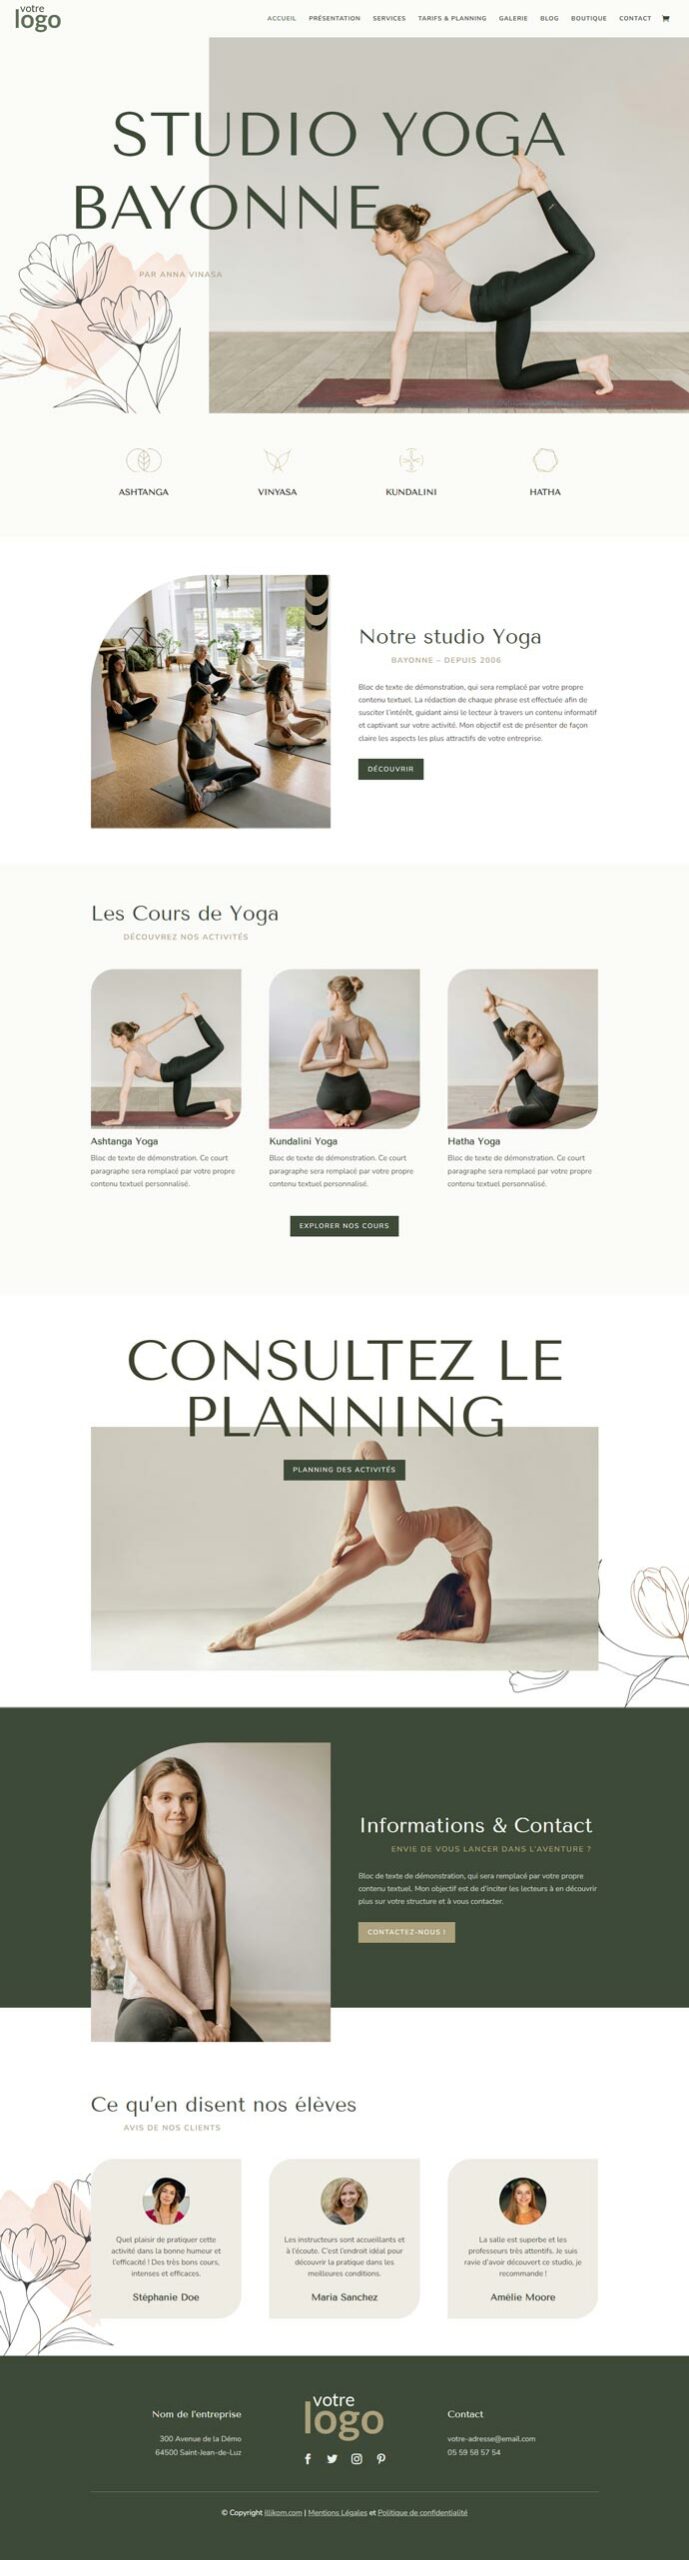 site internet studio Yoga